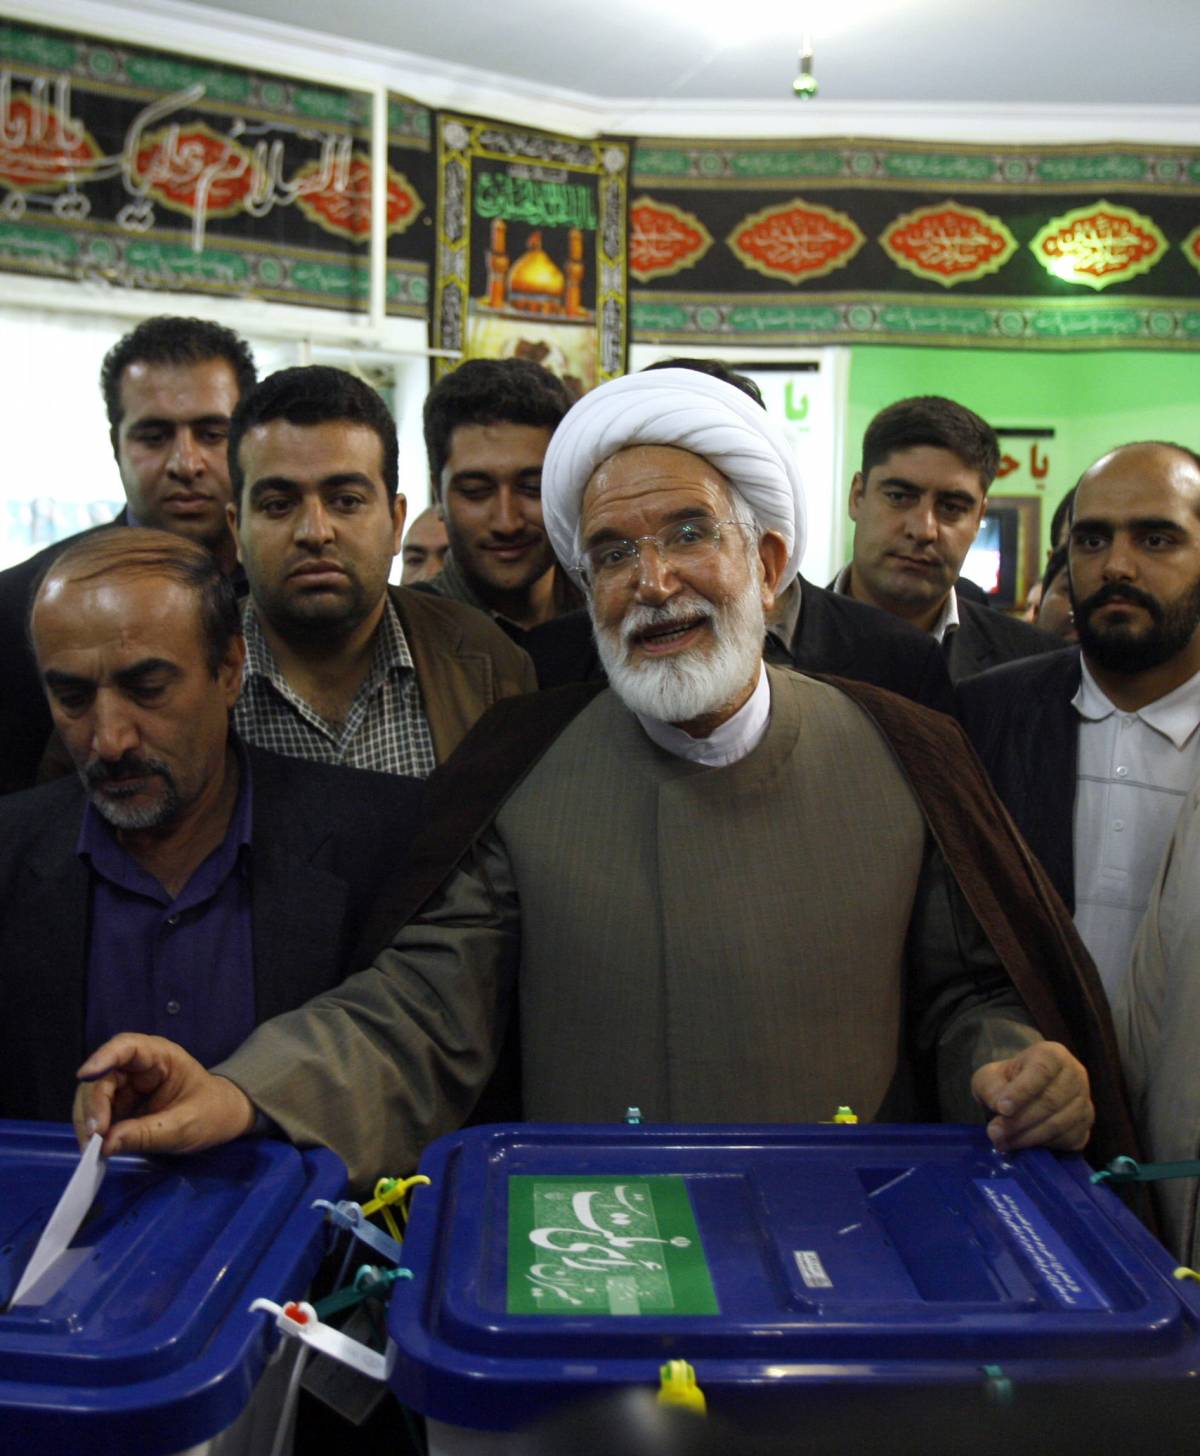 Iran, affluenza all'80% 
Prorogata chiusura urne 
Mousavi: "Rischio brogli"